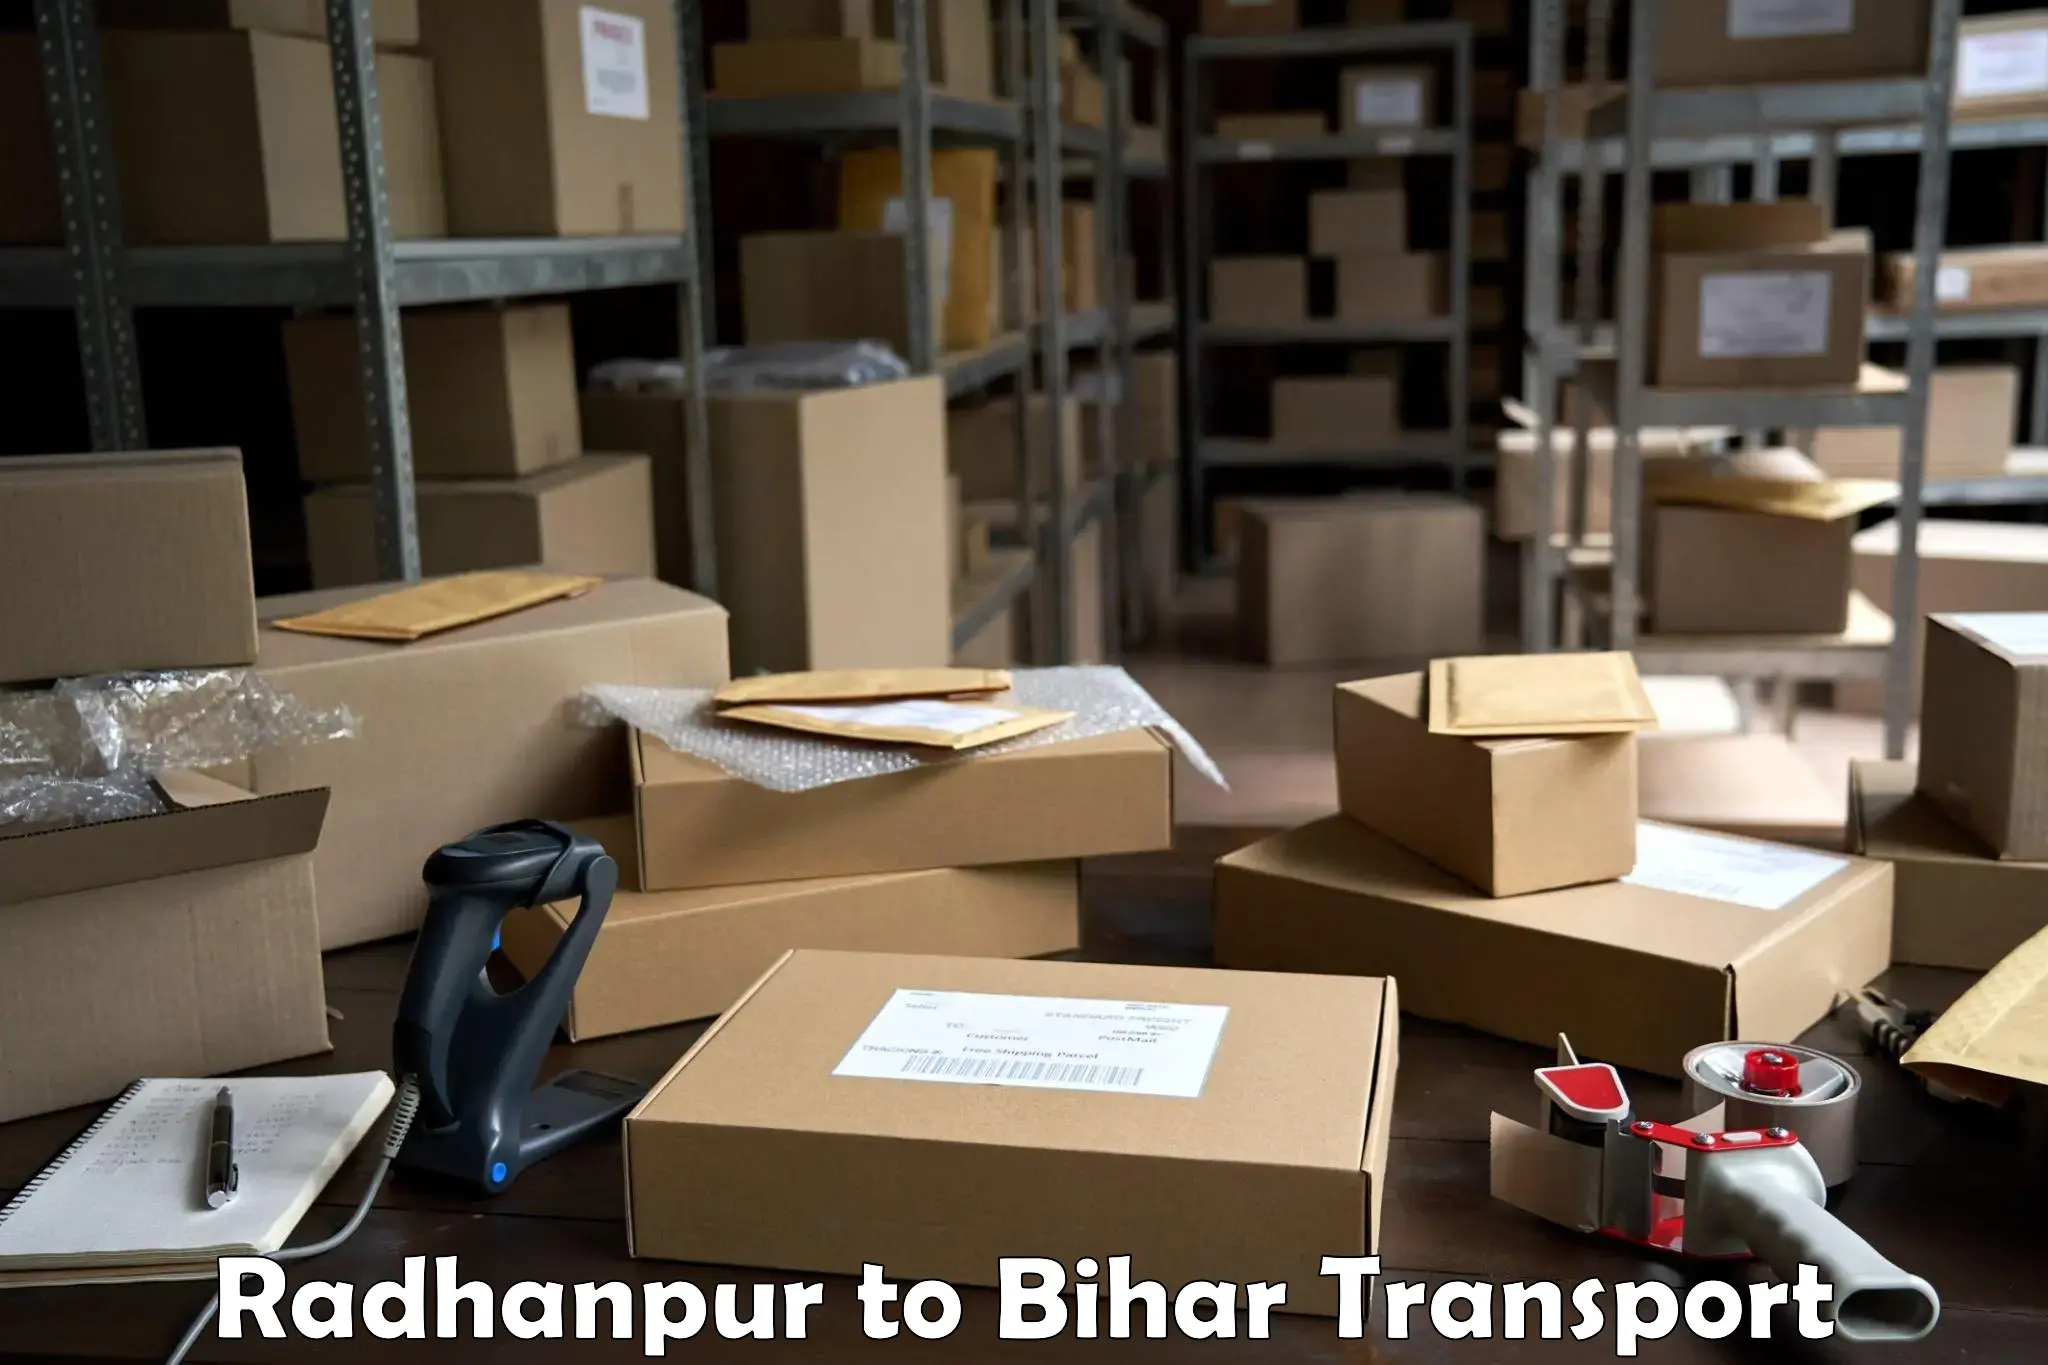 Goods delivery service Radhanpur to Madhepura